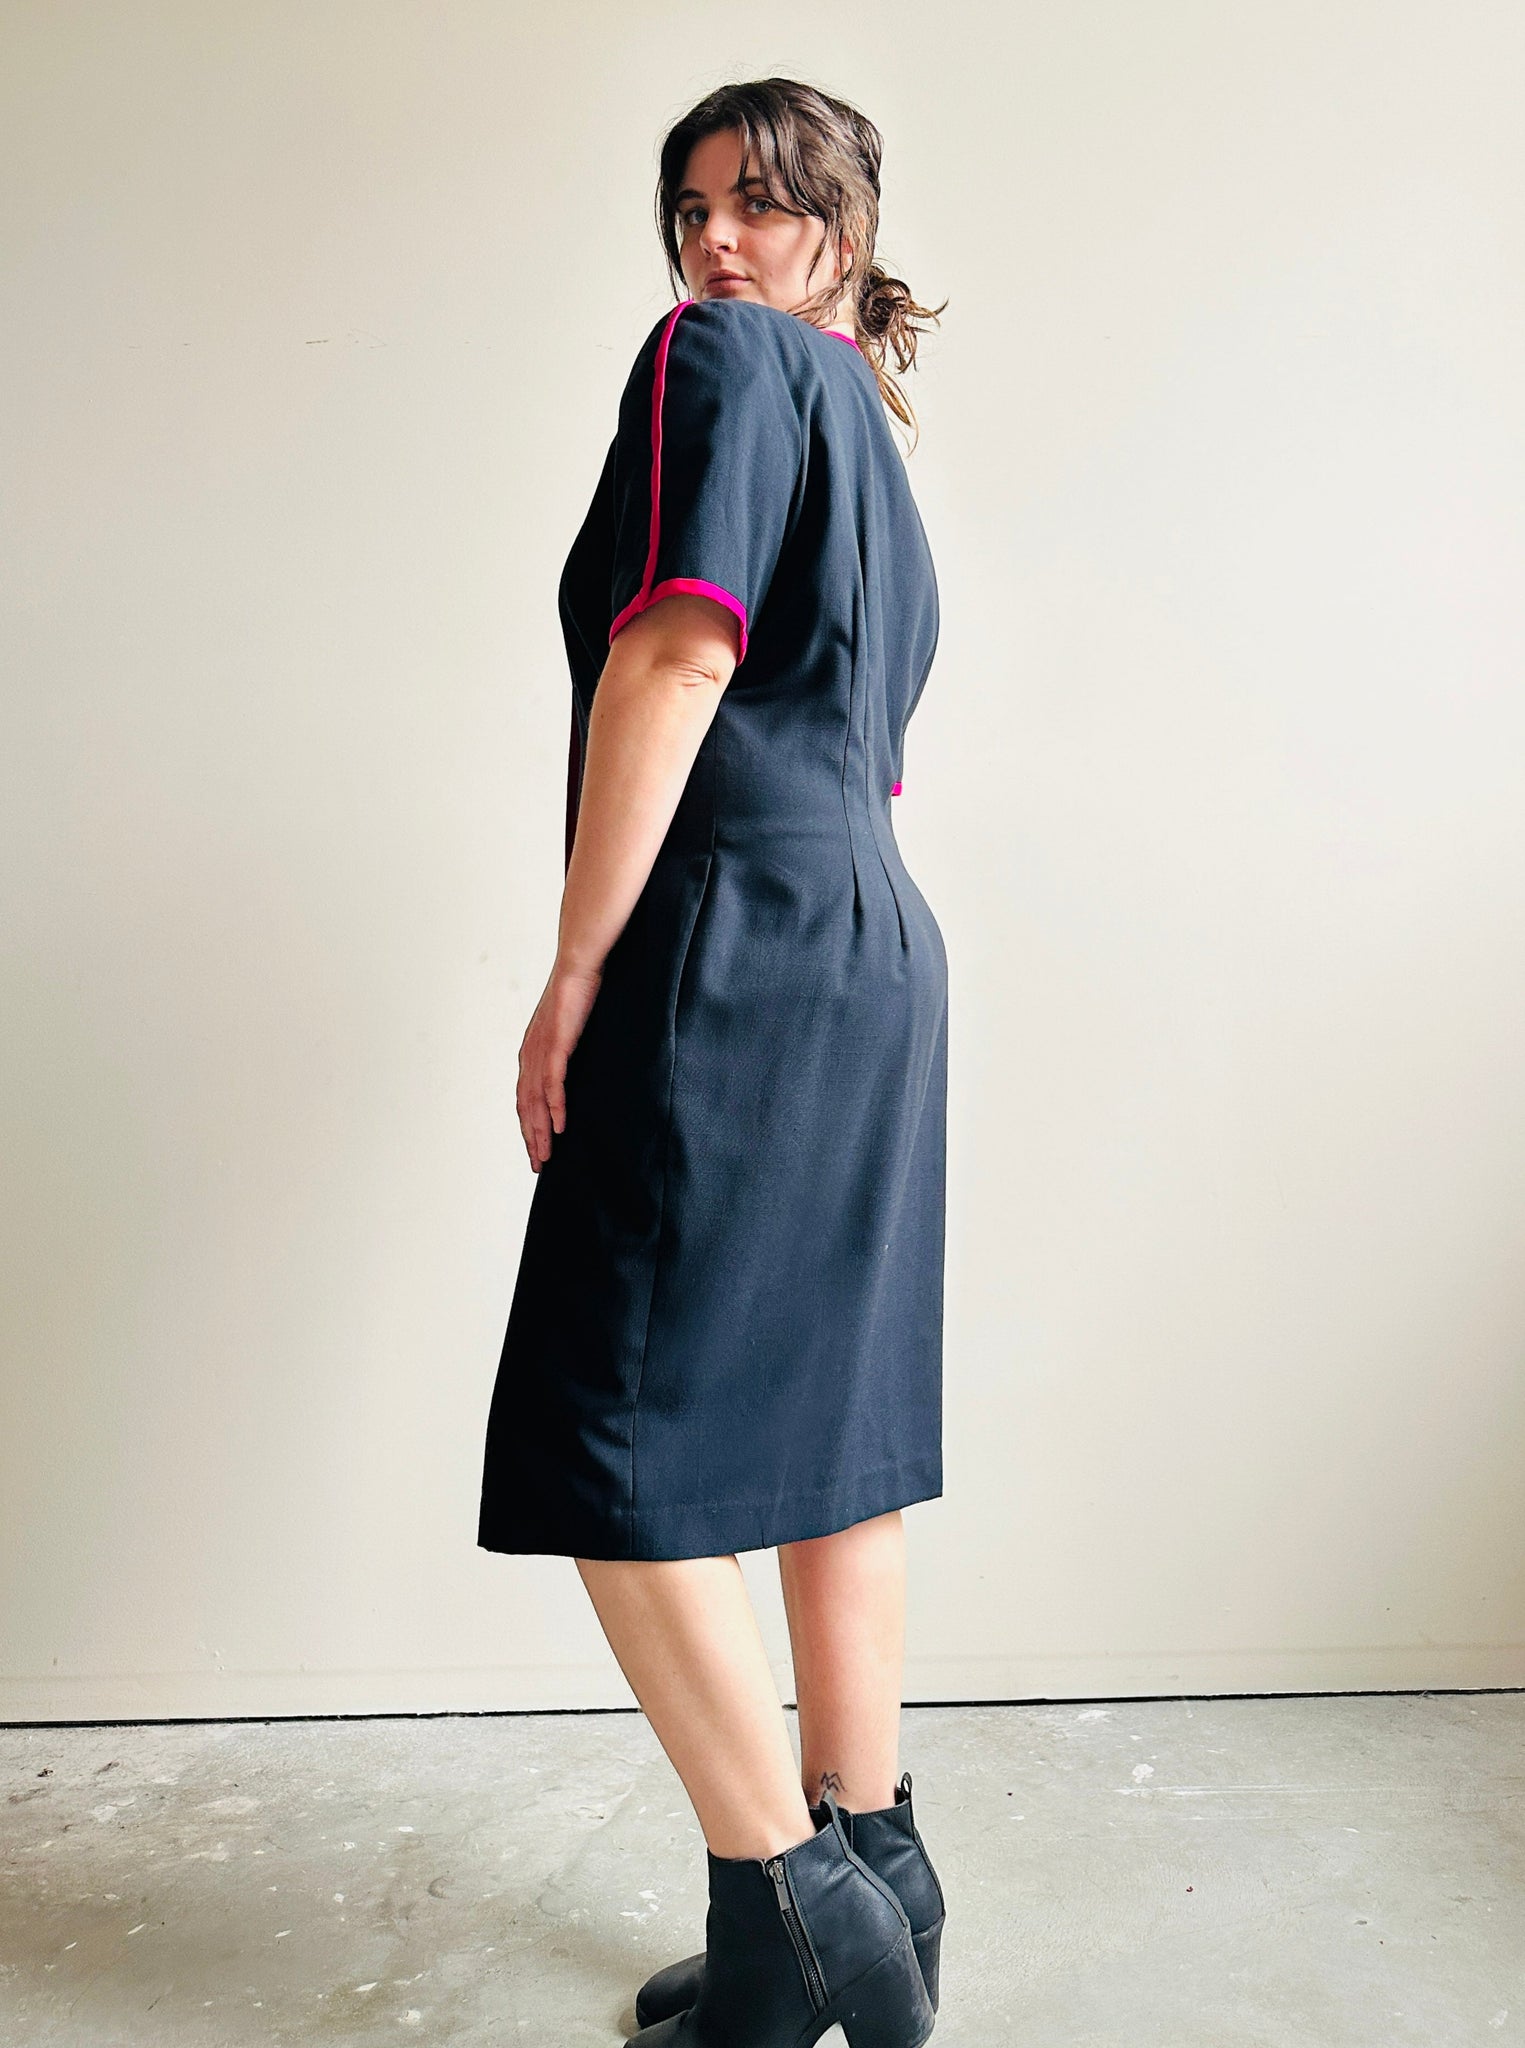 Vintage Black Button-Up Dress with Pink Trim  (XL)